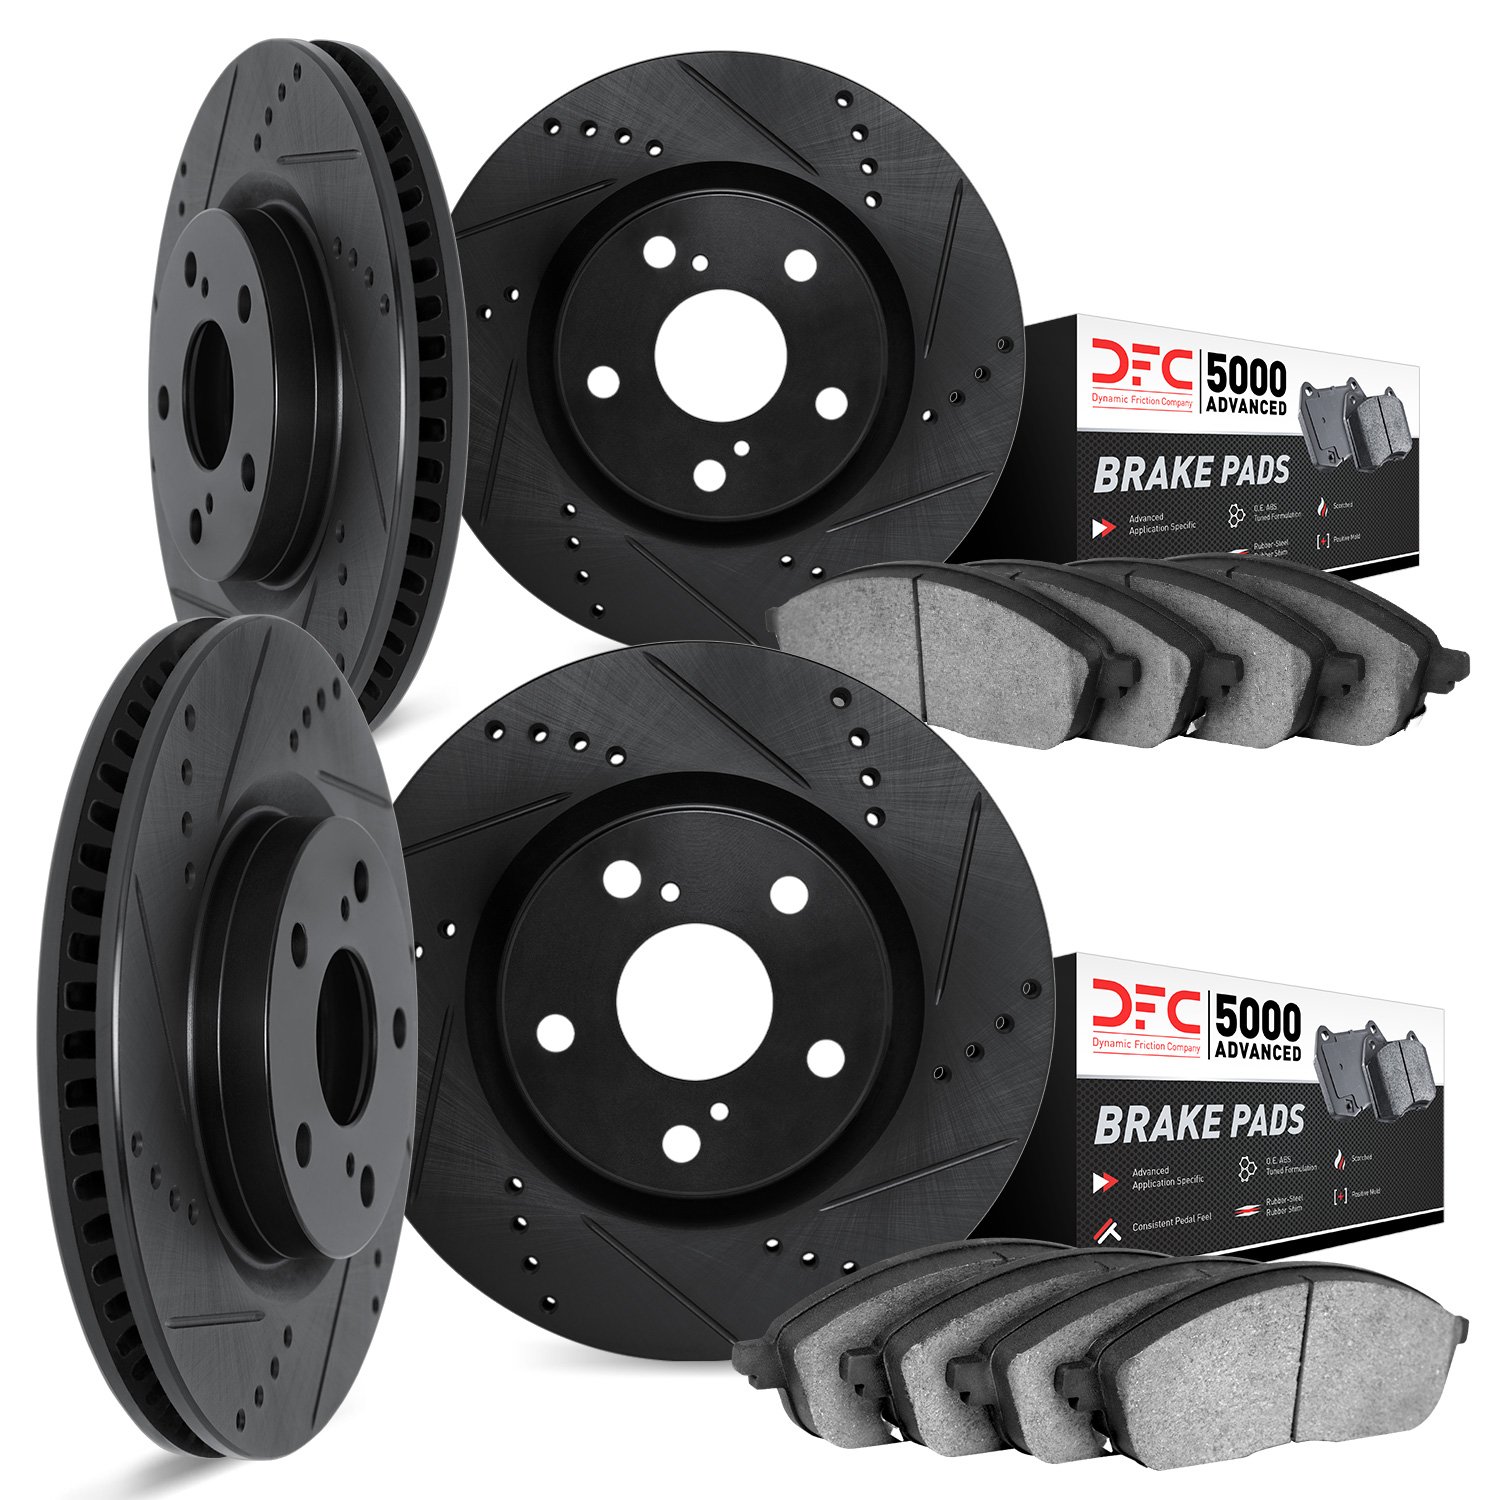 8504-40238 Drilled/Slotted Brake Rotors w/5000 Advanced Brake Pads Kit [Black], 2002-2006 Mopar, Position: Front and Rear